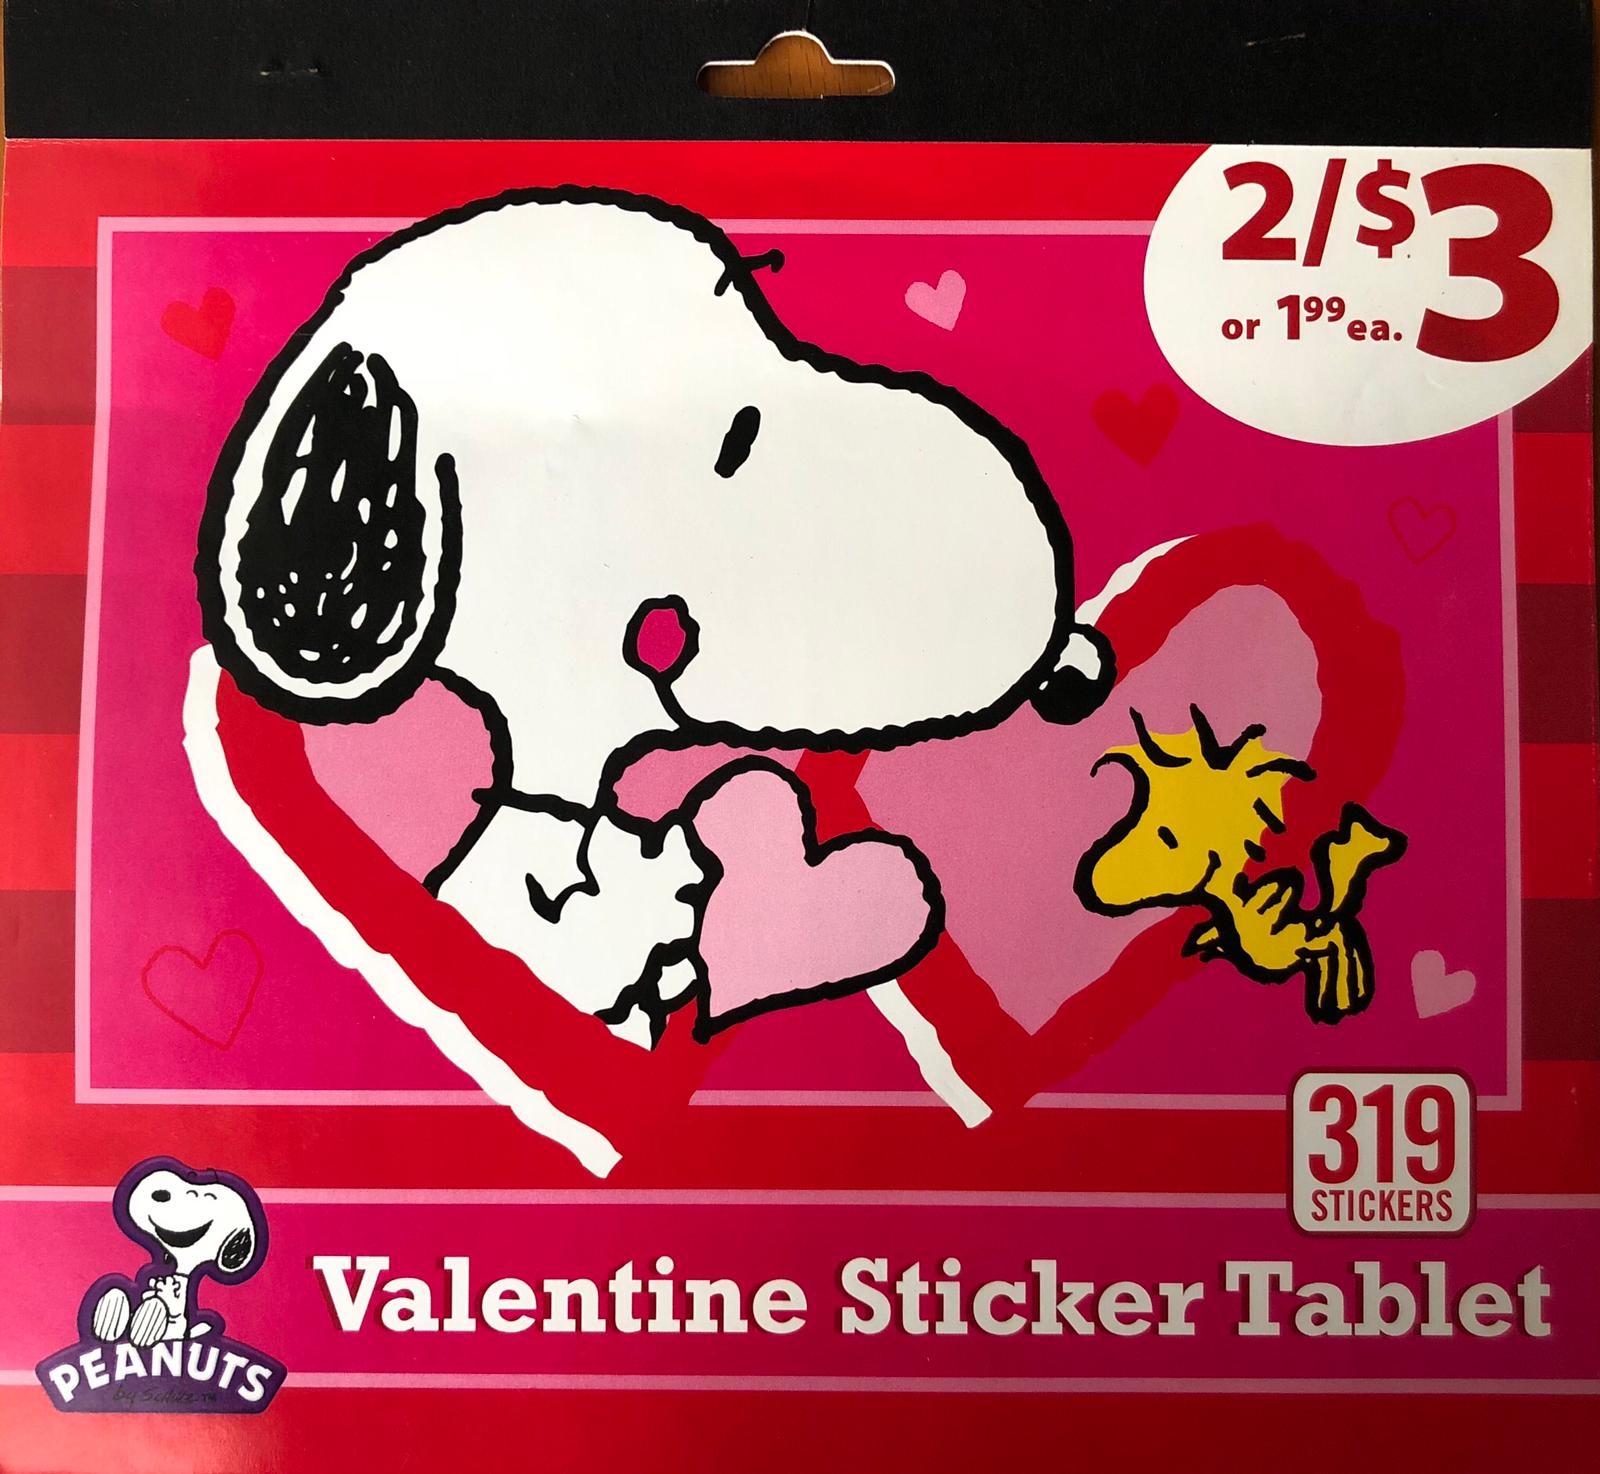 Snoopy Peanuts Valentine Sticker Tablet